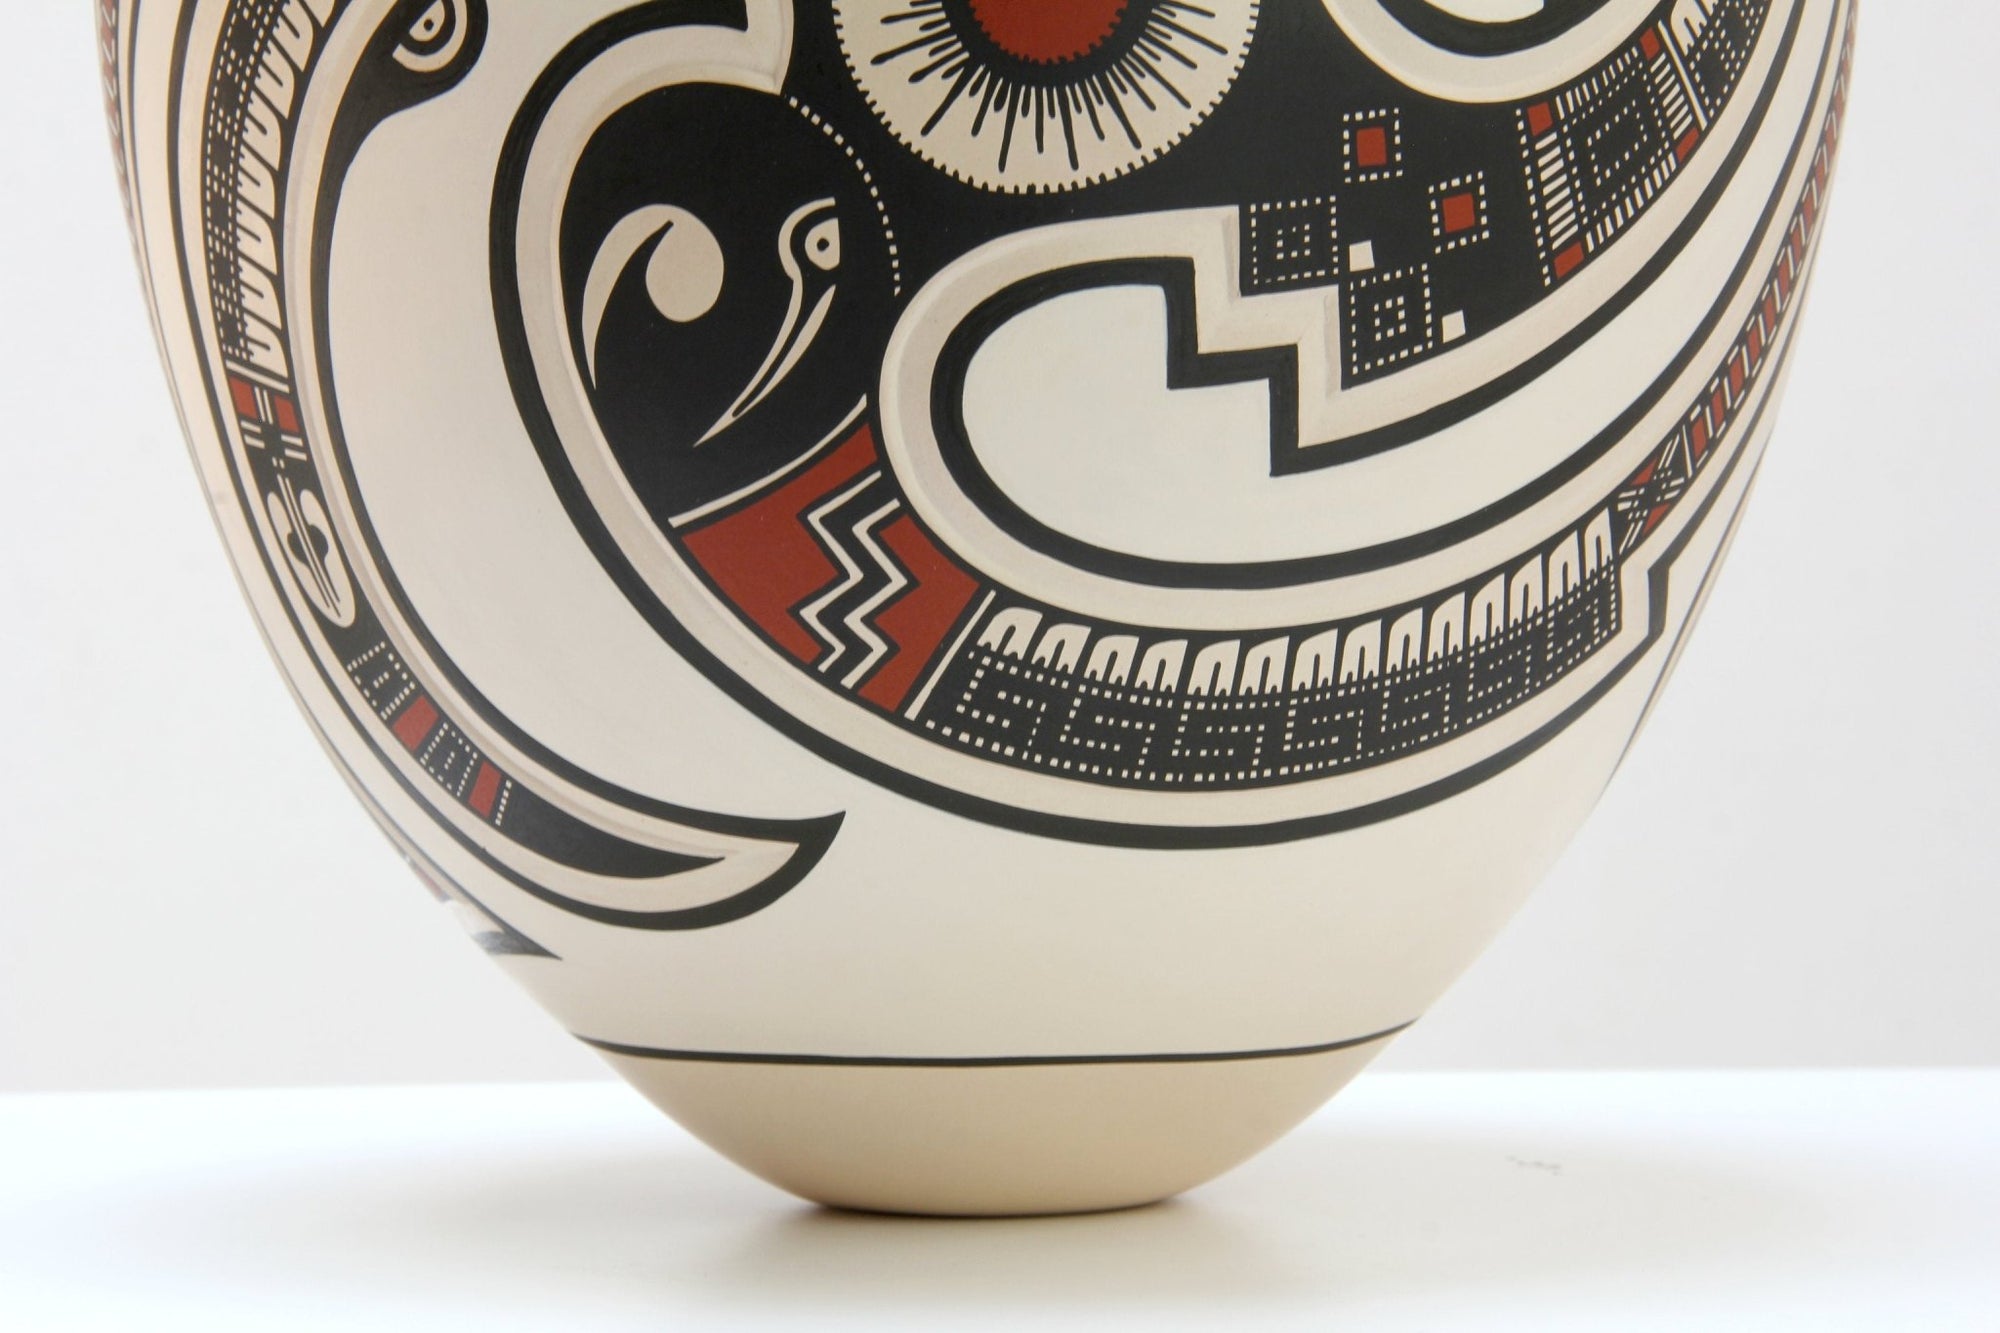 Céramique Mata Ortiz - Le passage du vent - Art Huichol - Marakame